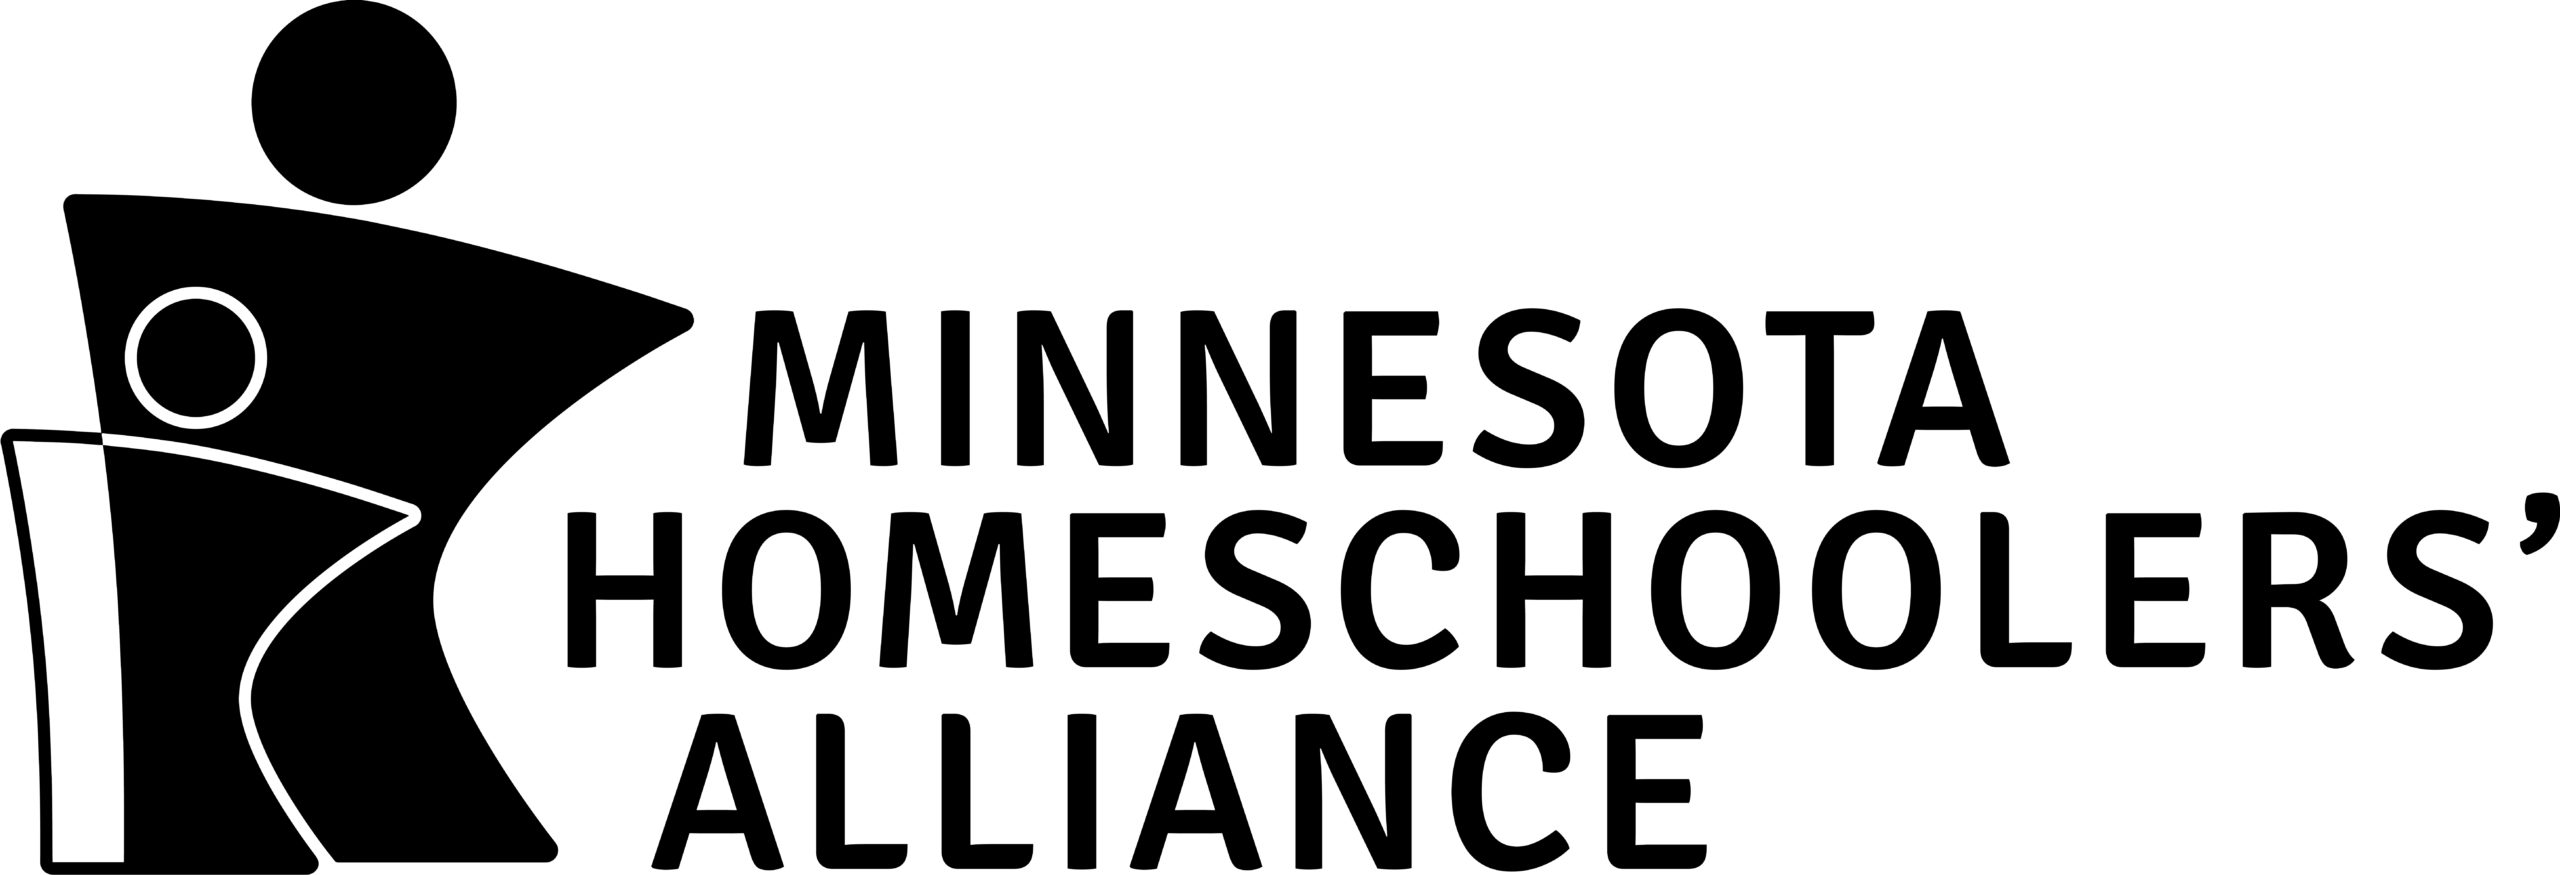 Minnesota Homeschoolers' Alliance